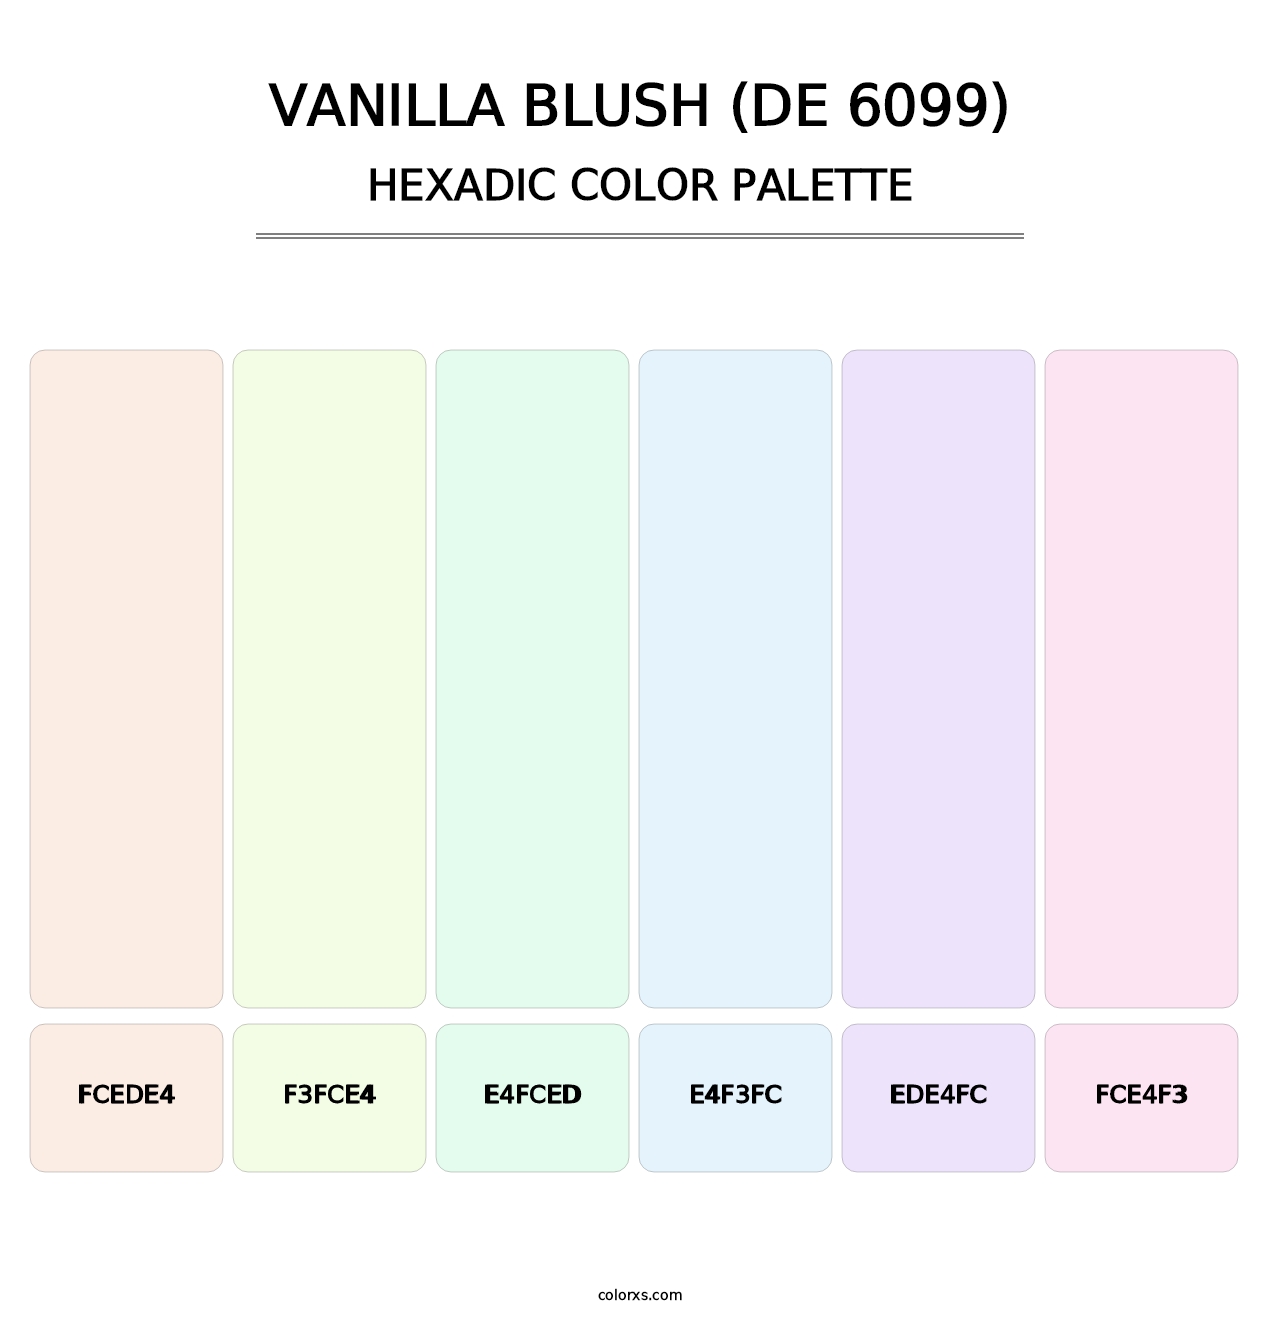 Vanilla Blush (DE 6099) - Hexadic Color Palette